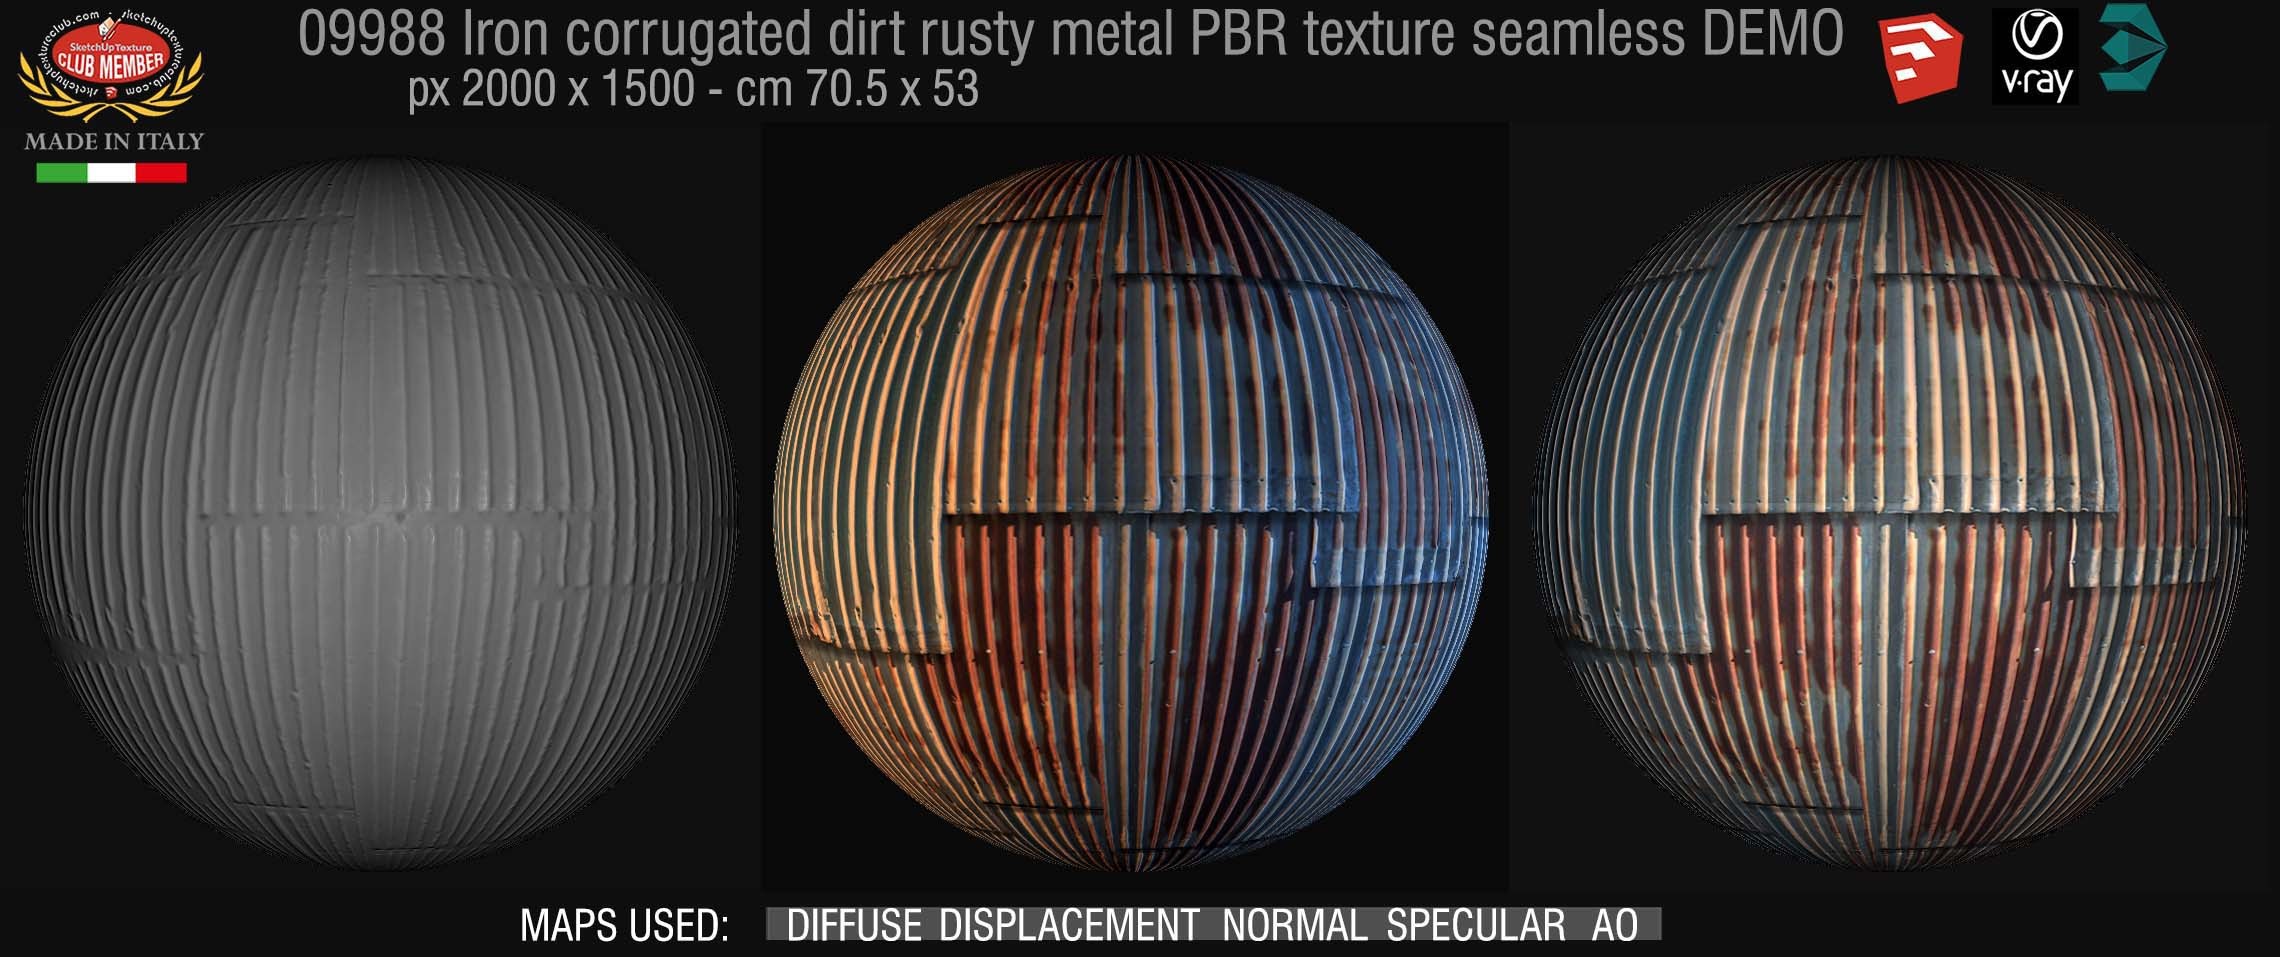 09988 Iron corrugated dirt rusty metal PBR texture seamless